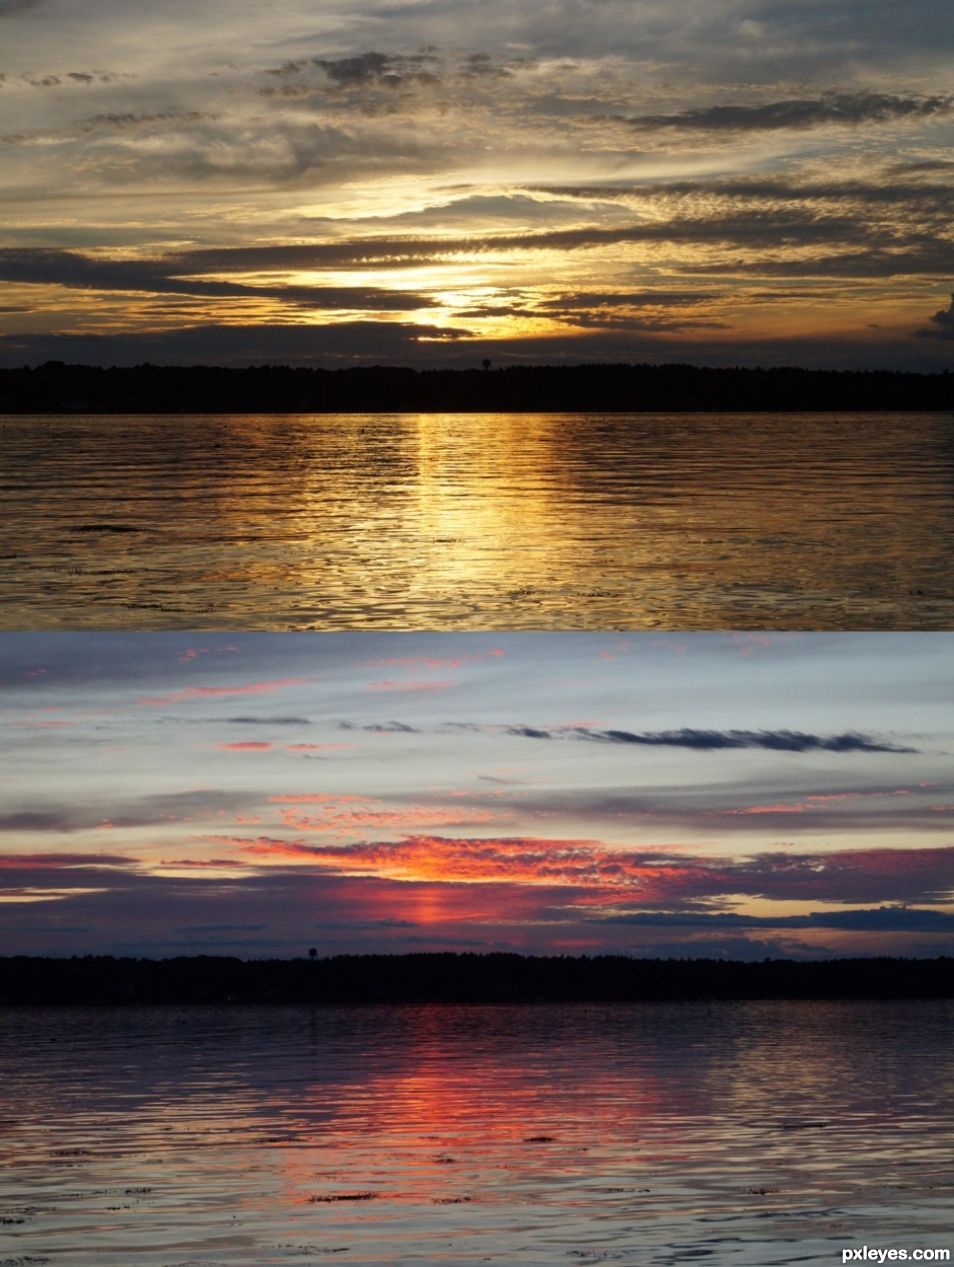 The same sunset